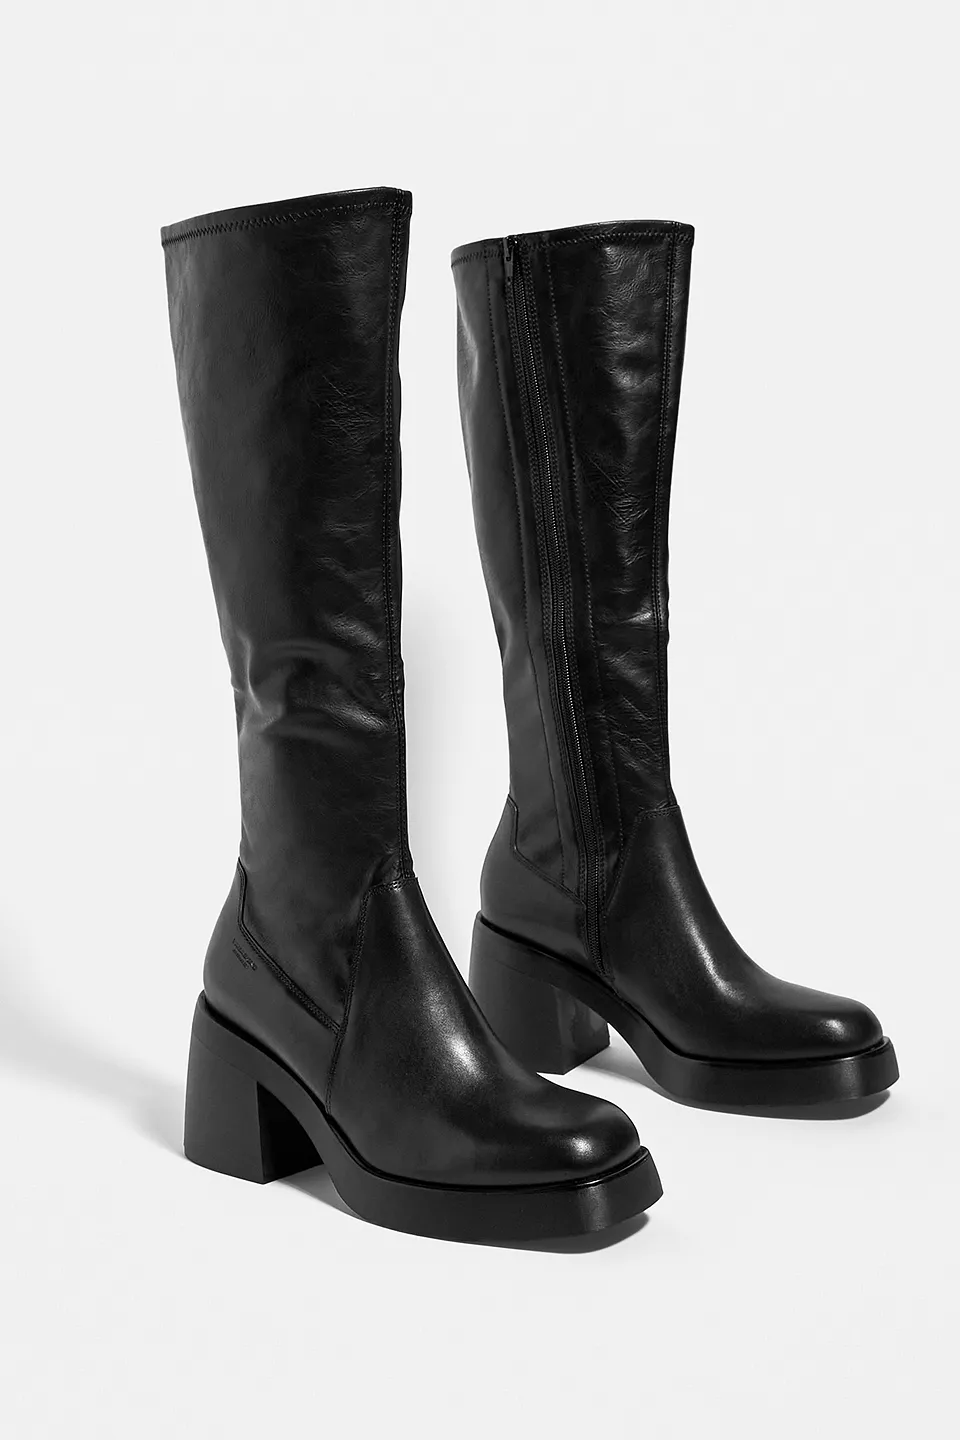 urbanoutfitters.com | Vagabond Brooke Knee High Black Boots